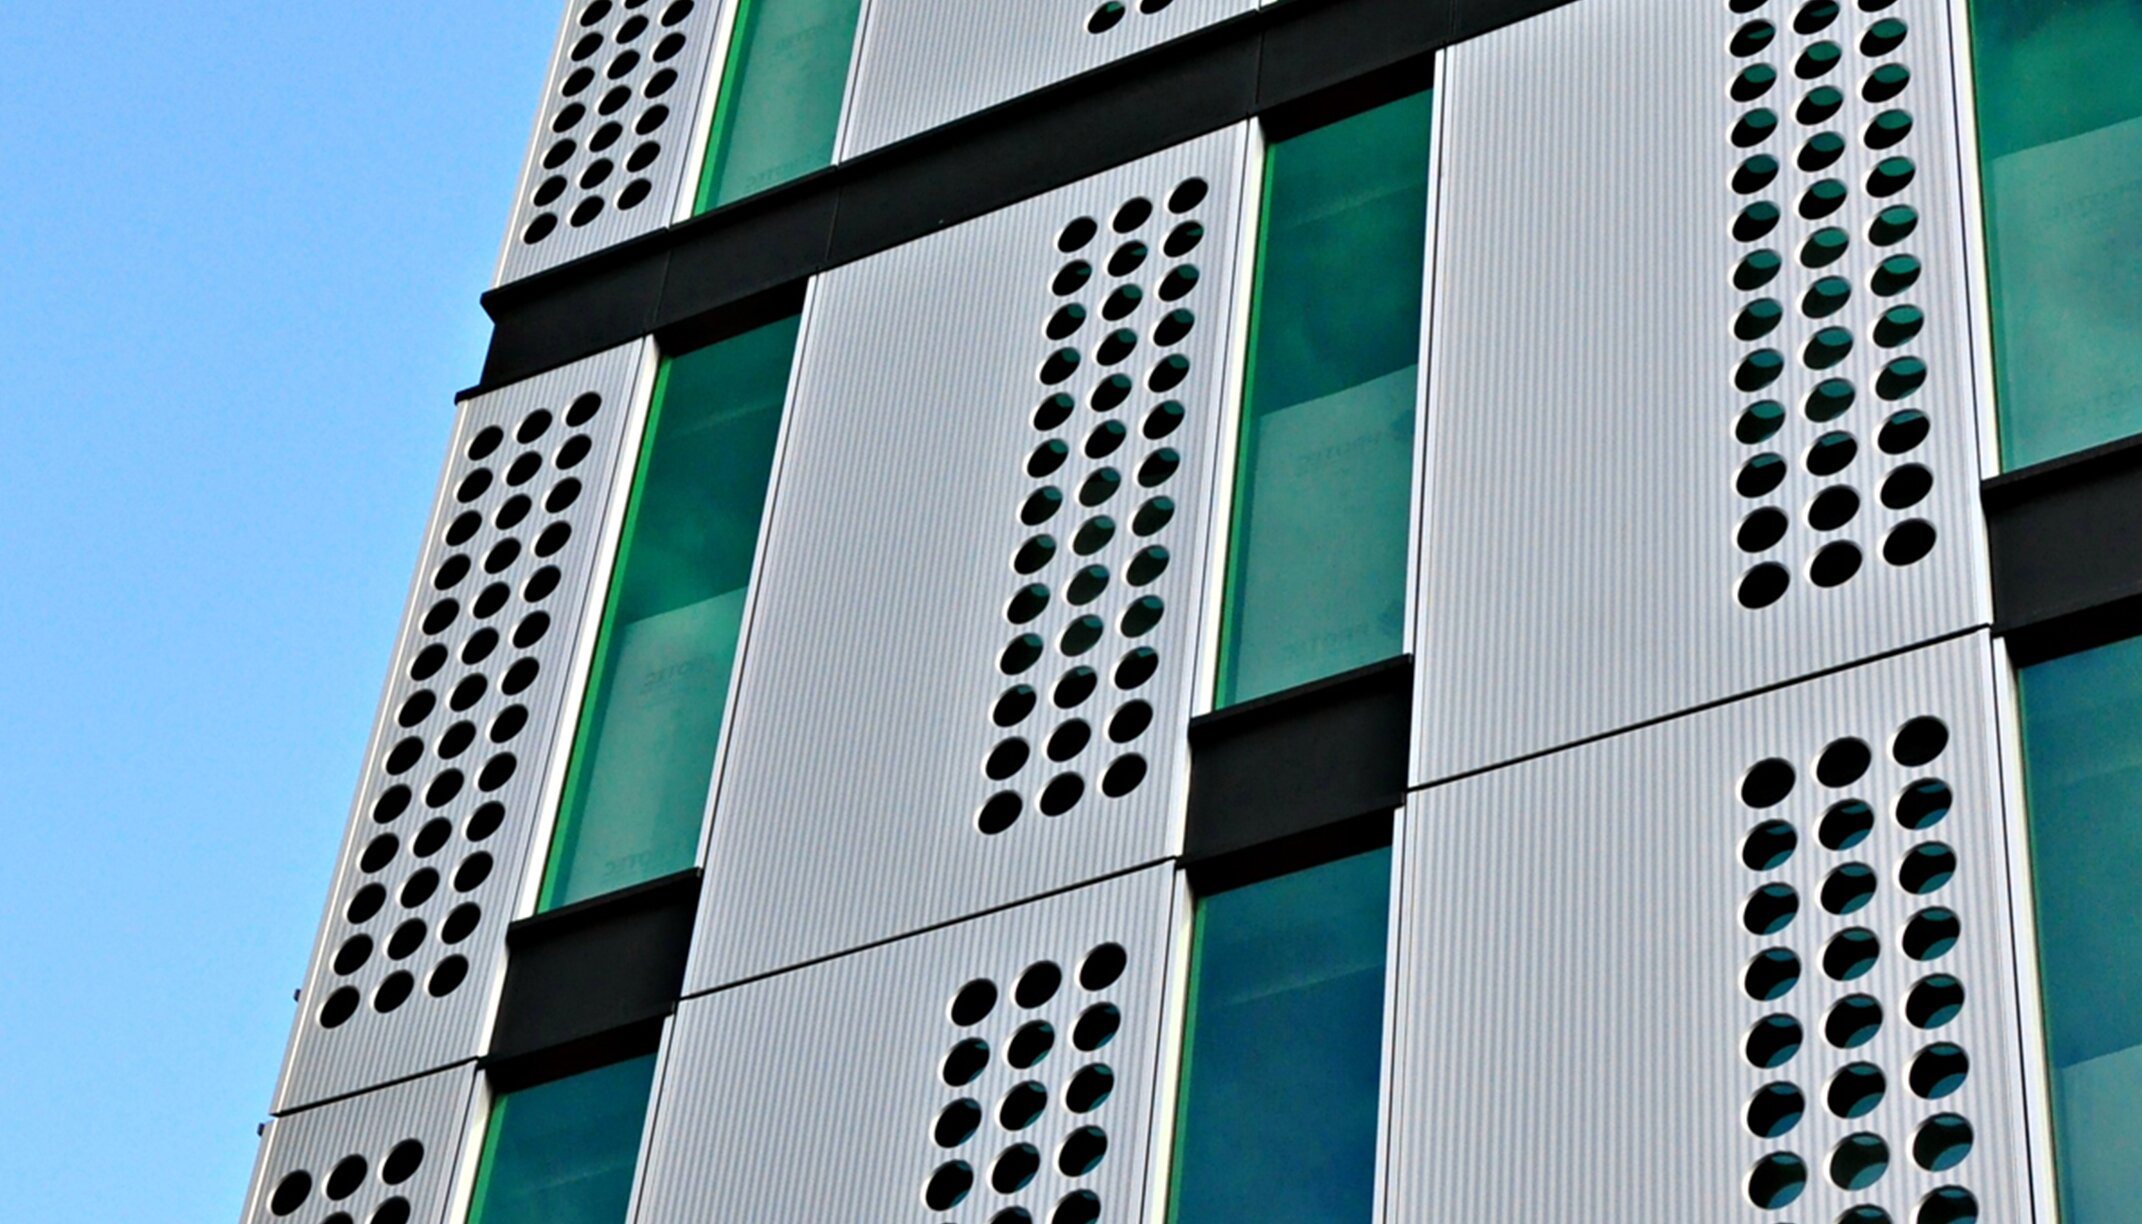 "White Collar Factory" Fassadengestaltung, Aluminium, London